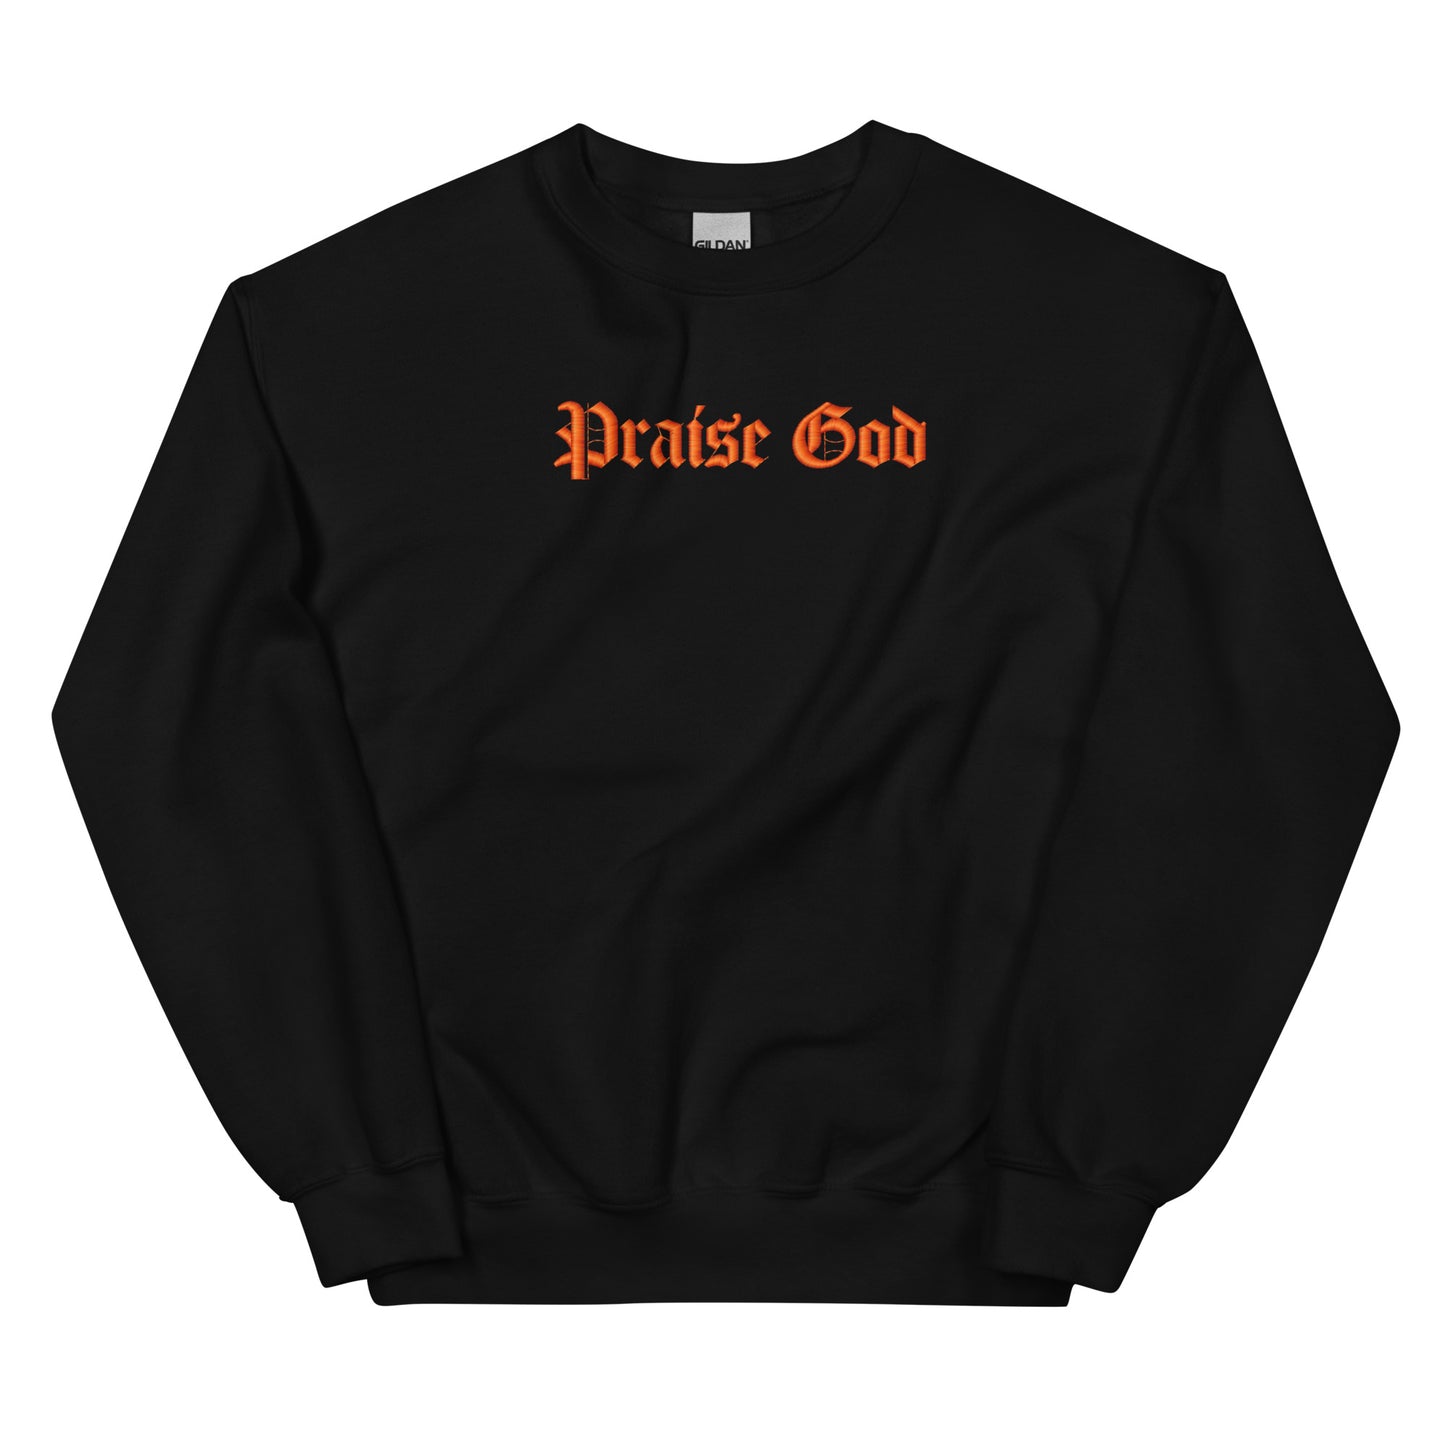 Praise God Classics fashion sweatshirt